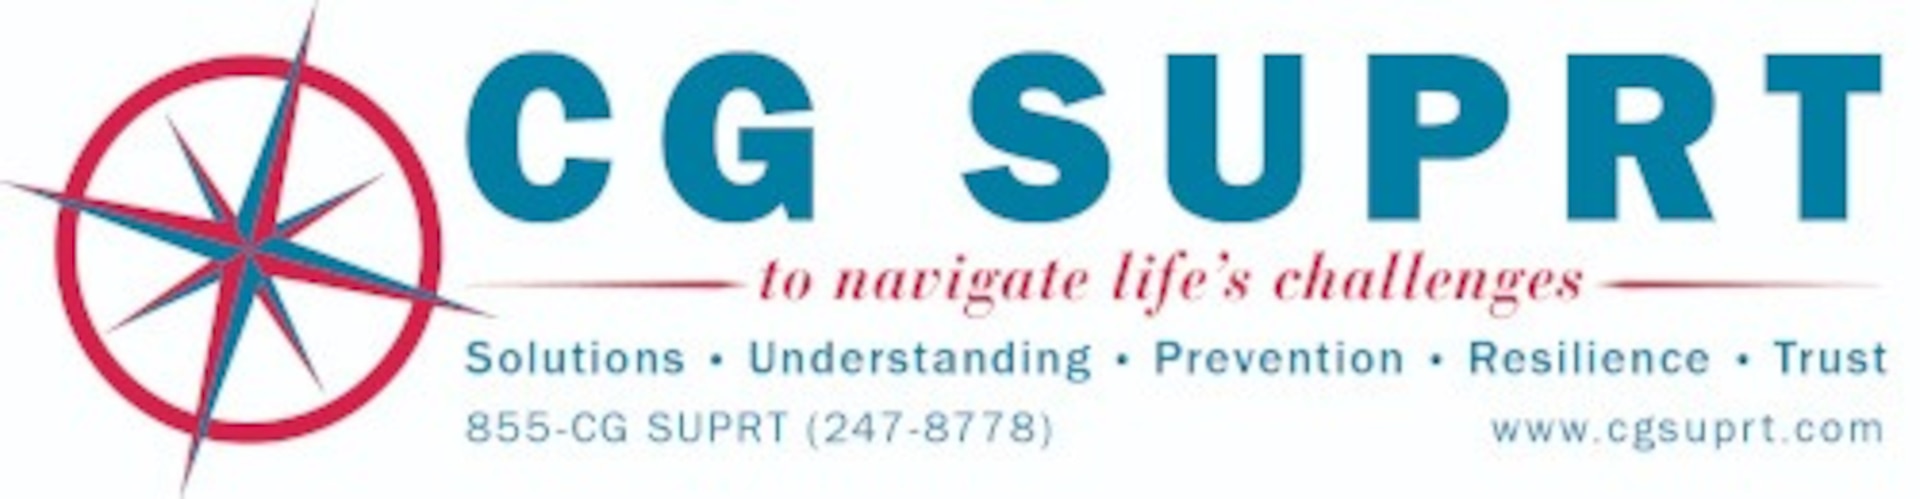 CG SUPRT logo